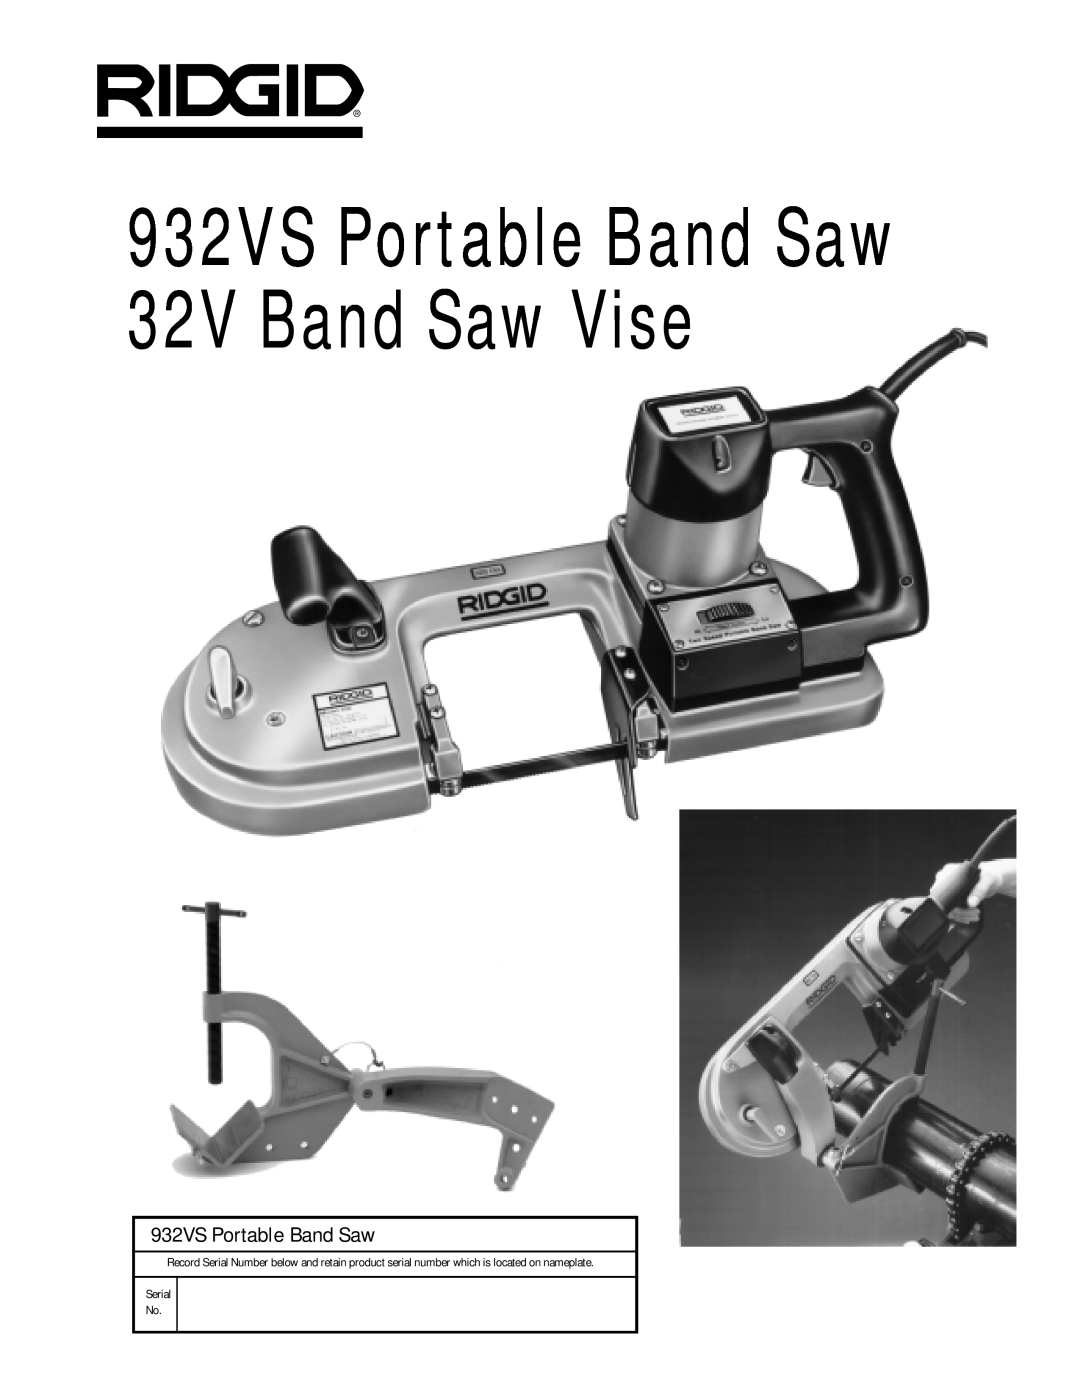 RIDGID manual 932VS Portable Band Saw 32V Band Saw Vise, Serial No 